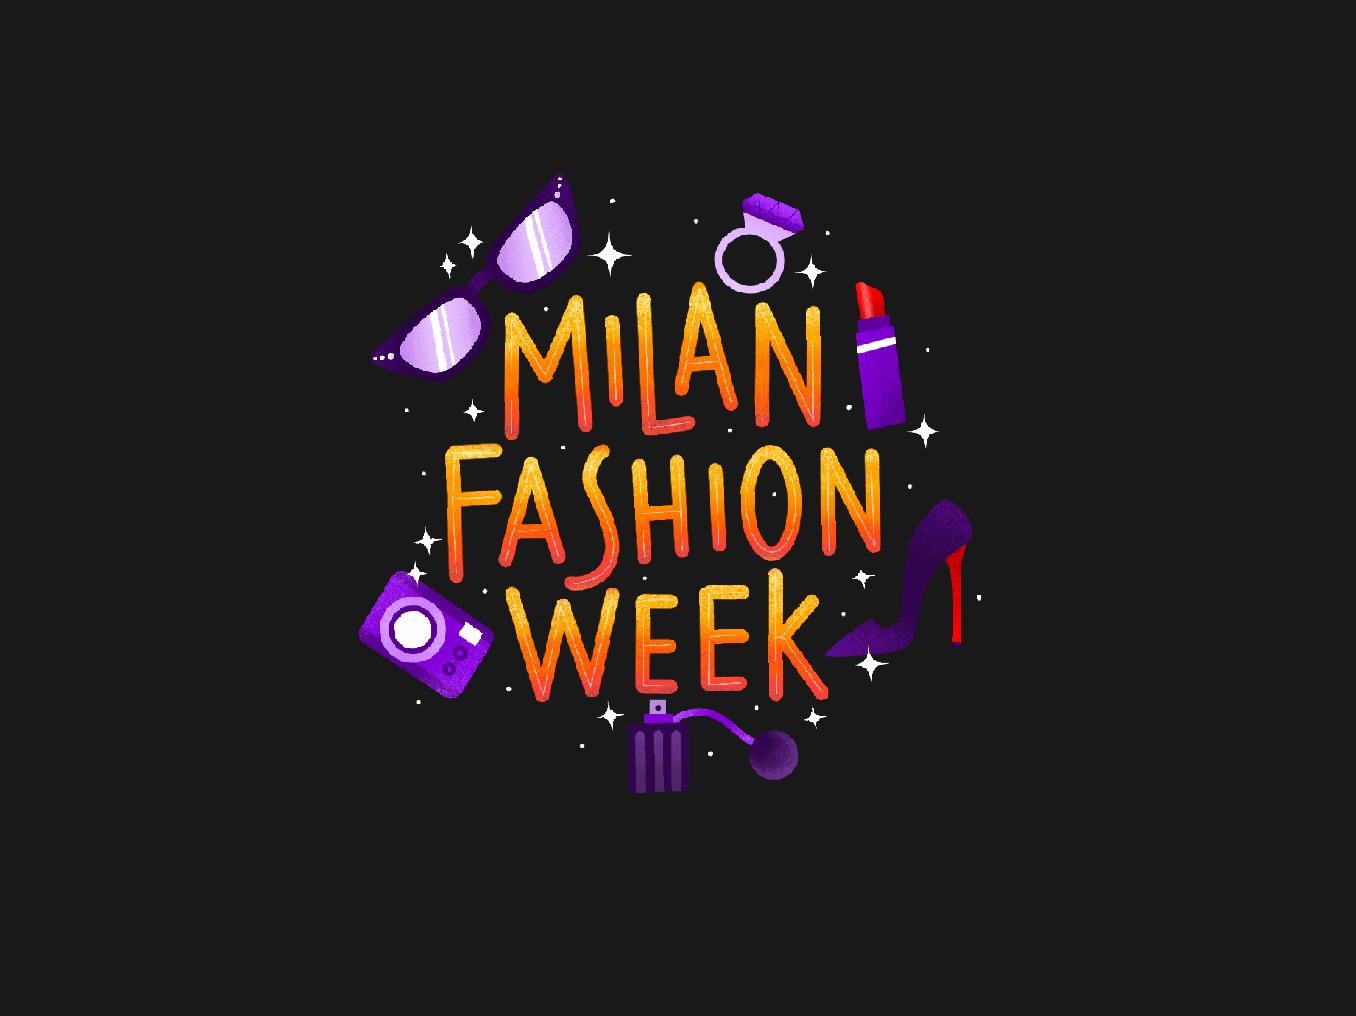 Milan Fashion Week by Gabriele Locci on Dribbble